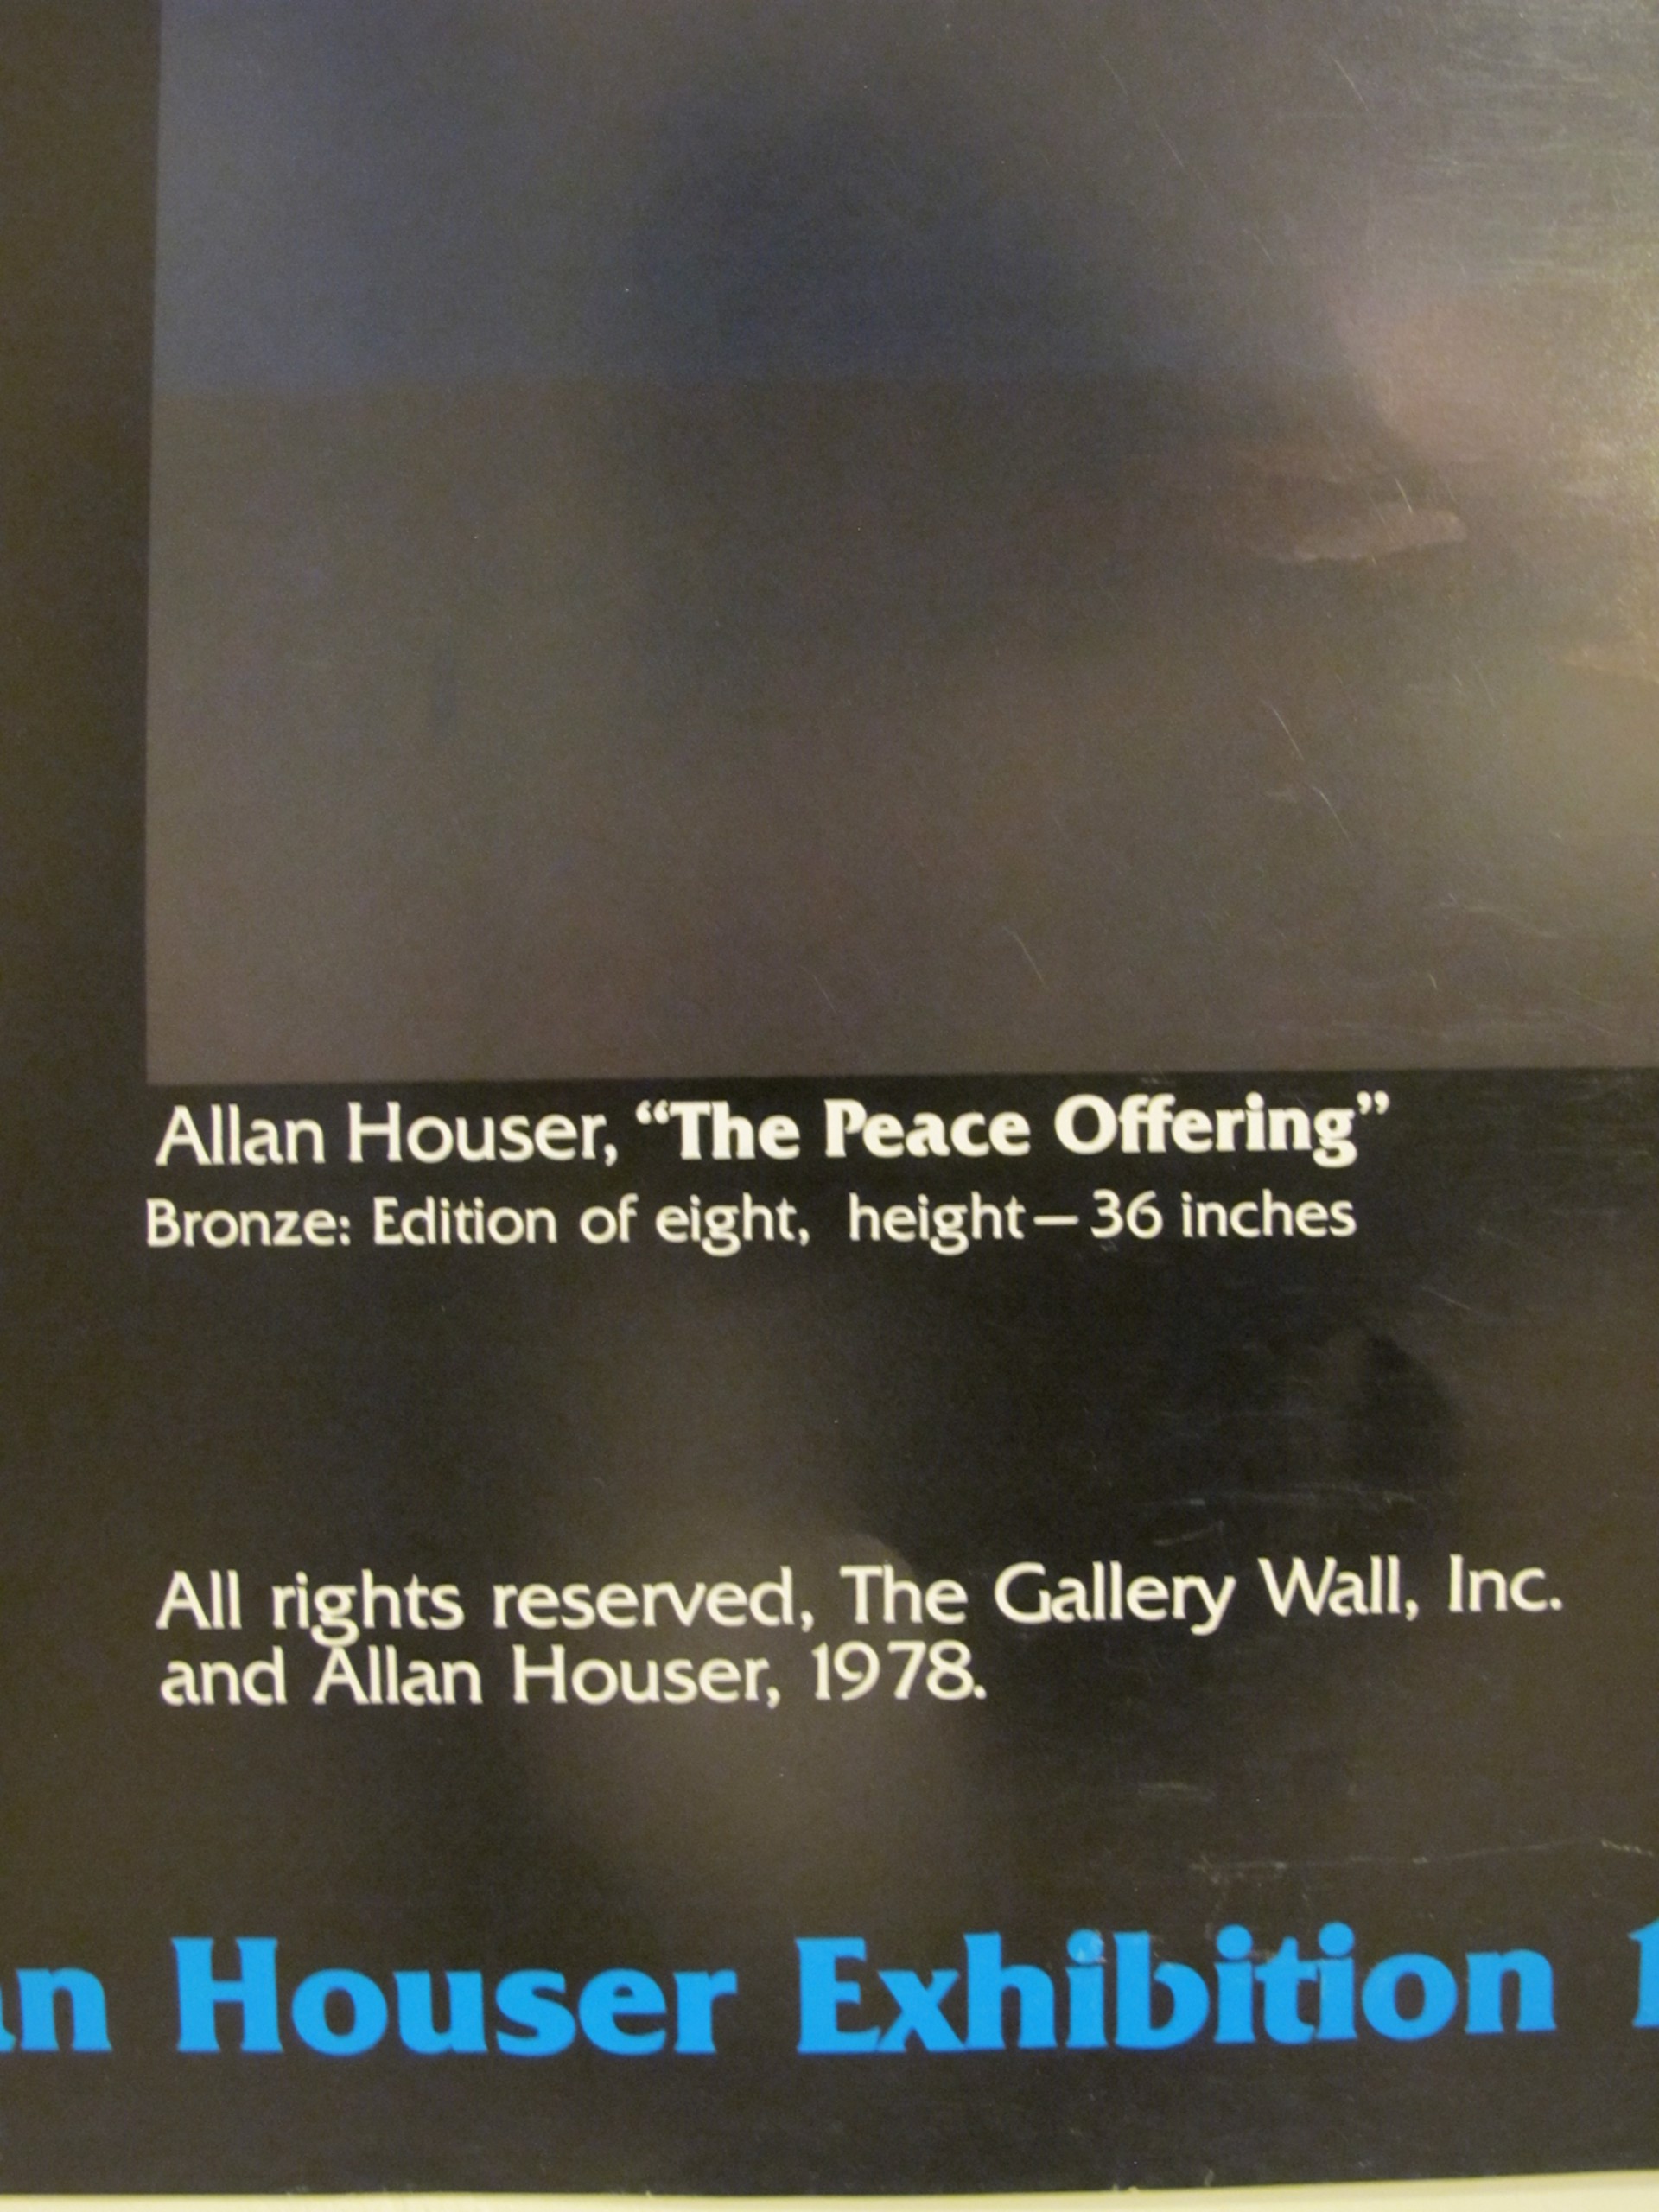 Allan Houser "Peace Offering" poster by Allan Houser